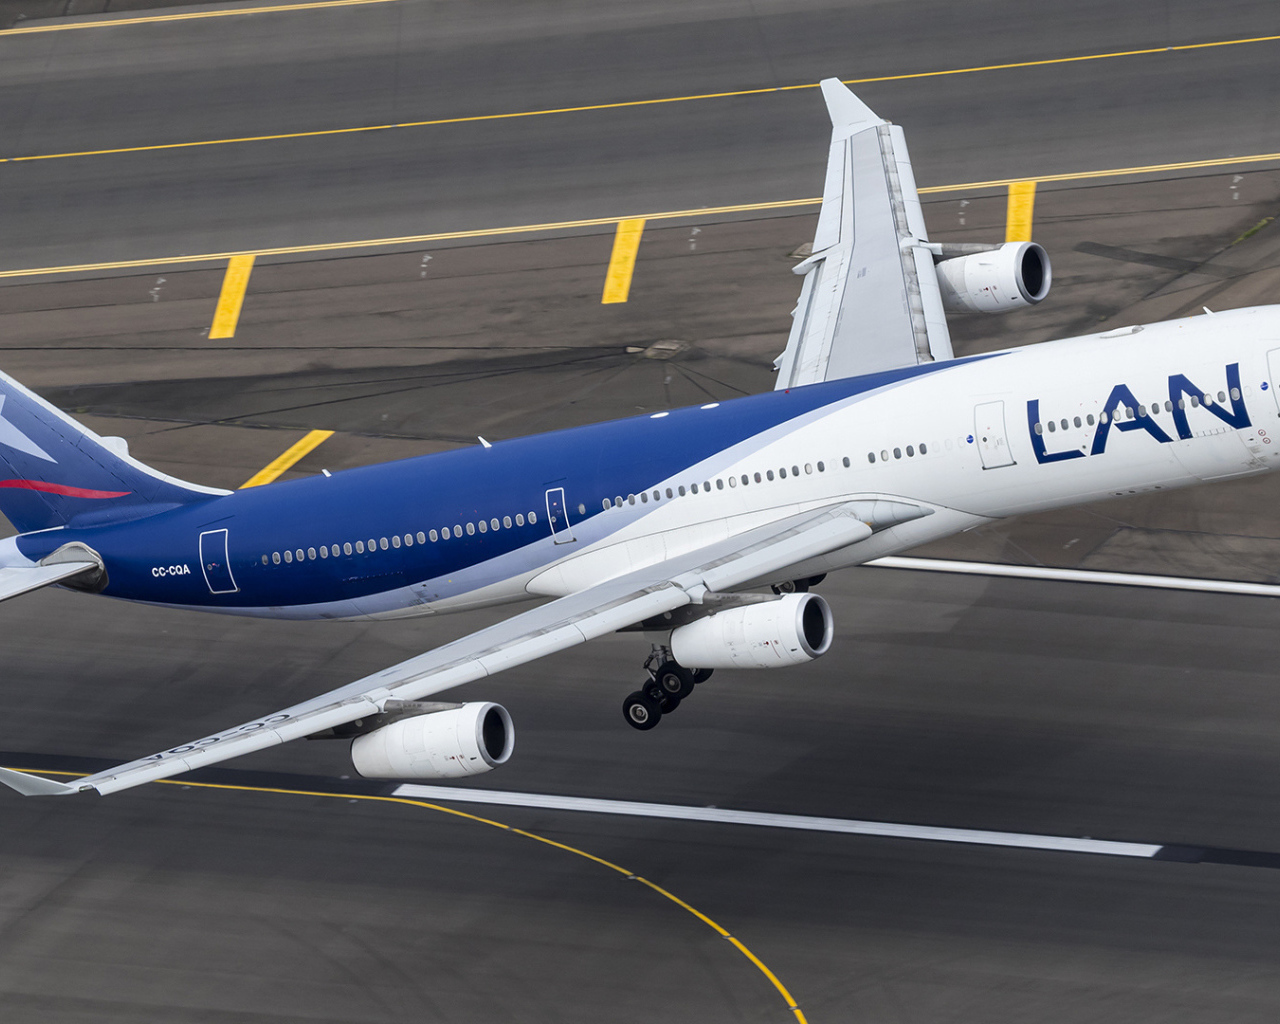 LAN Airbus airline takes off